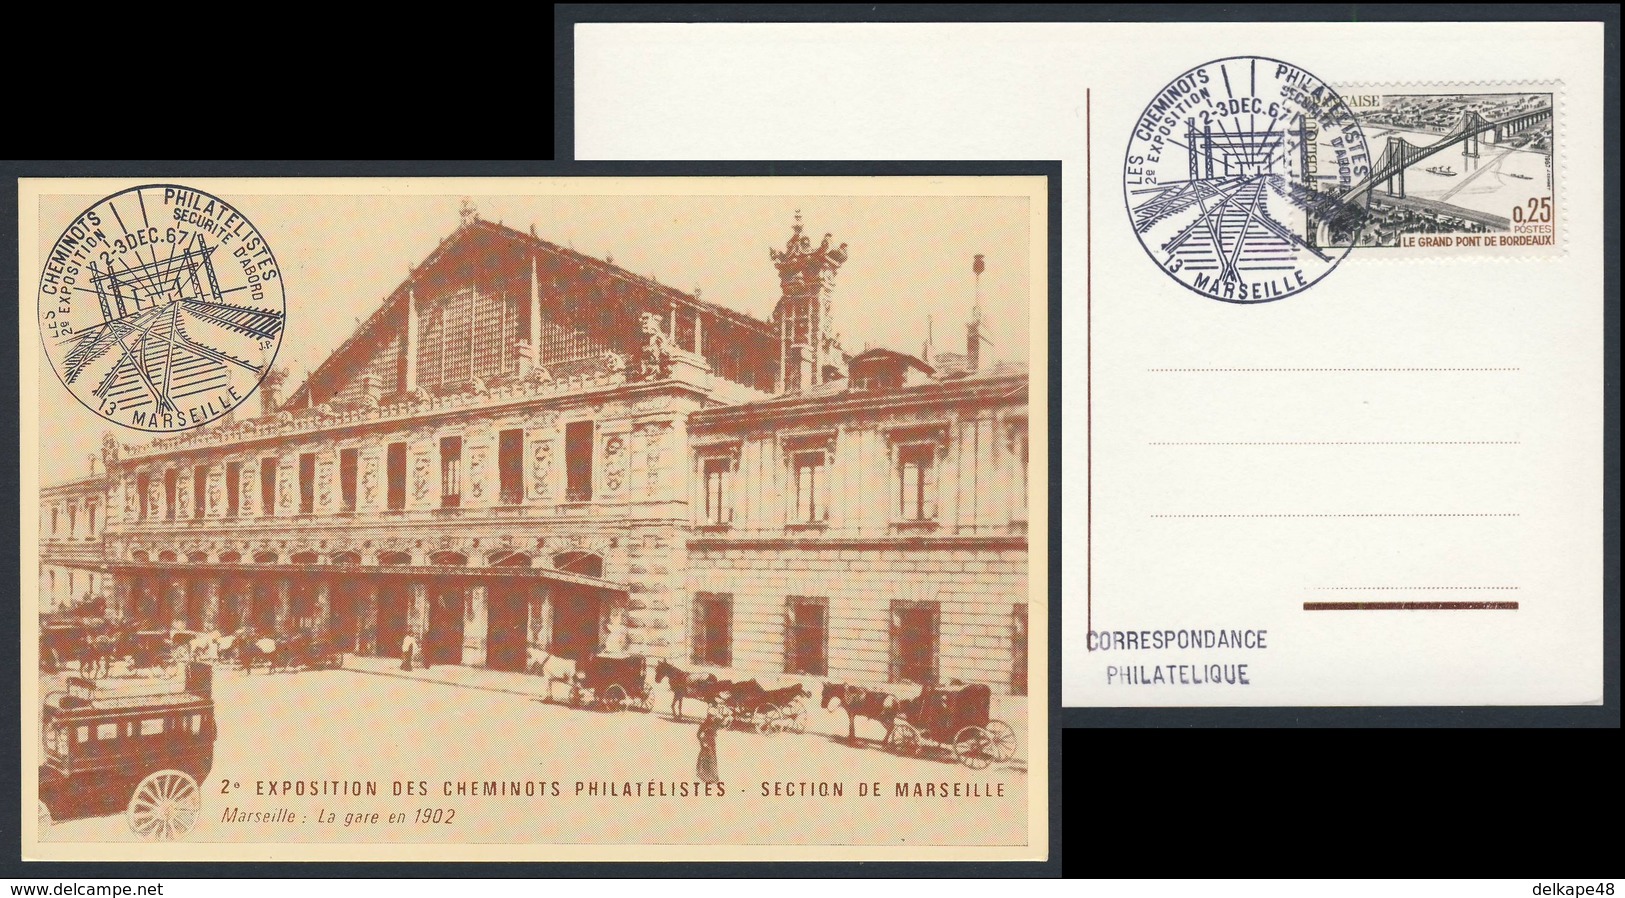 France Rep. Française 1967 Postcard / Postkarte / Carte Postale - Gare Marseille (1902) / Railway Station / Bahnhofe - Eisenbahnen